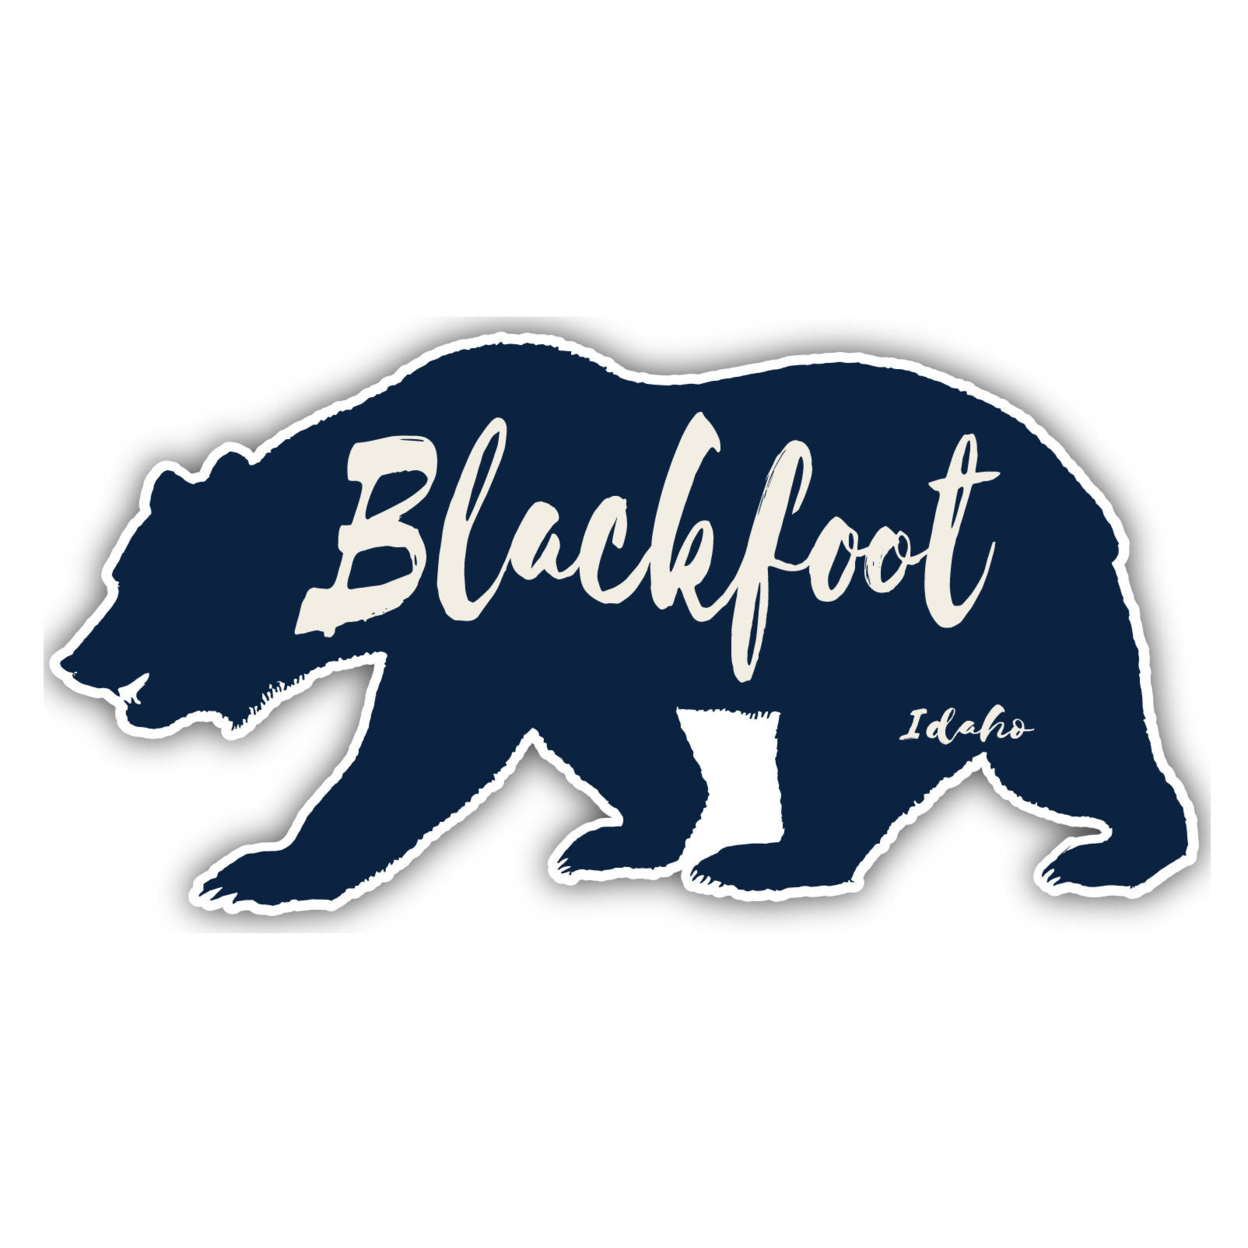 Blackfoot Idaho Souvenir Decorative Stickers (Choose Theme And Size) - 4-Pack, 10-Inch, Bear